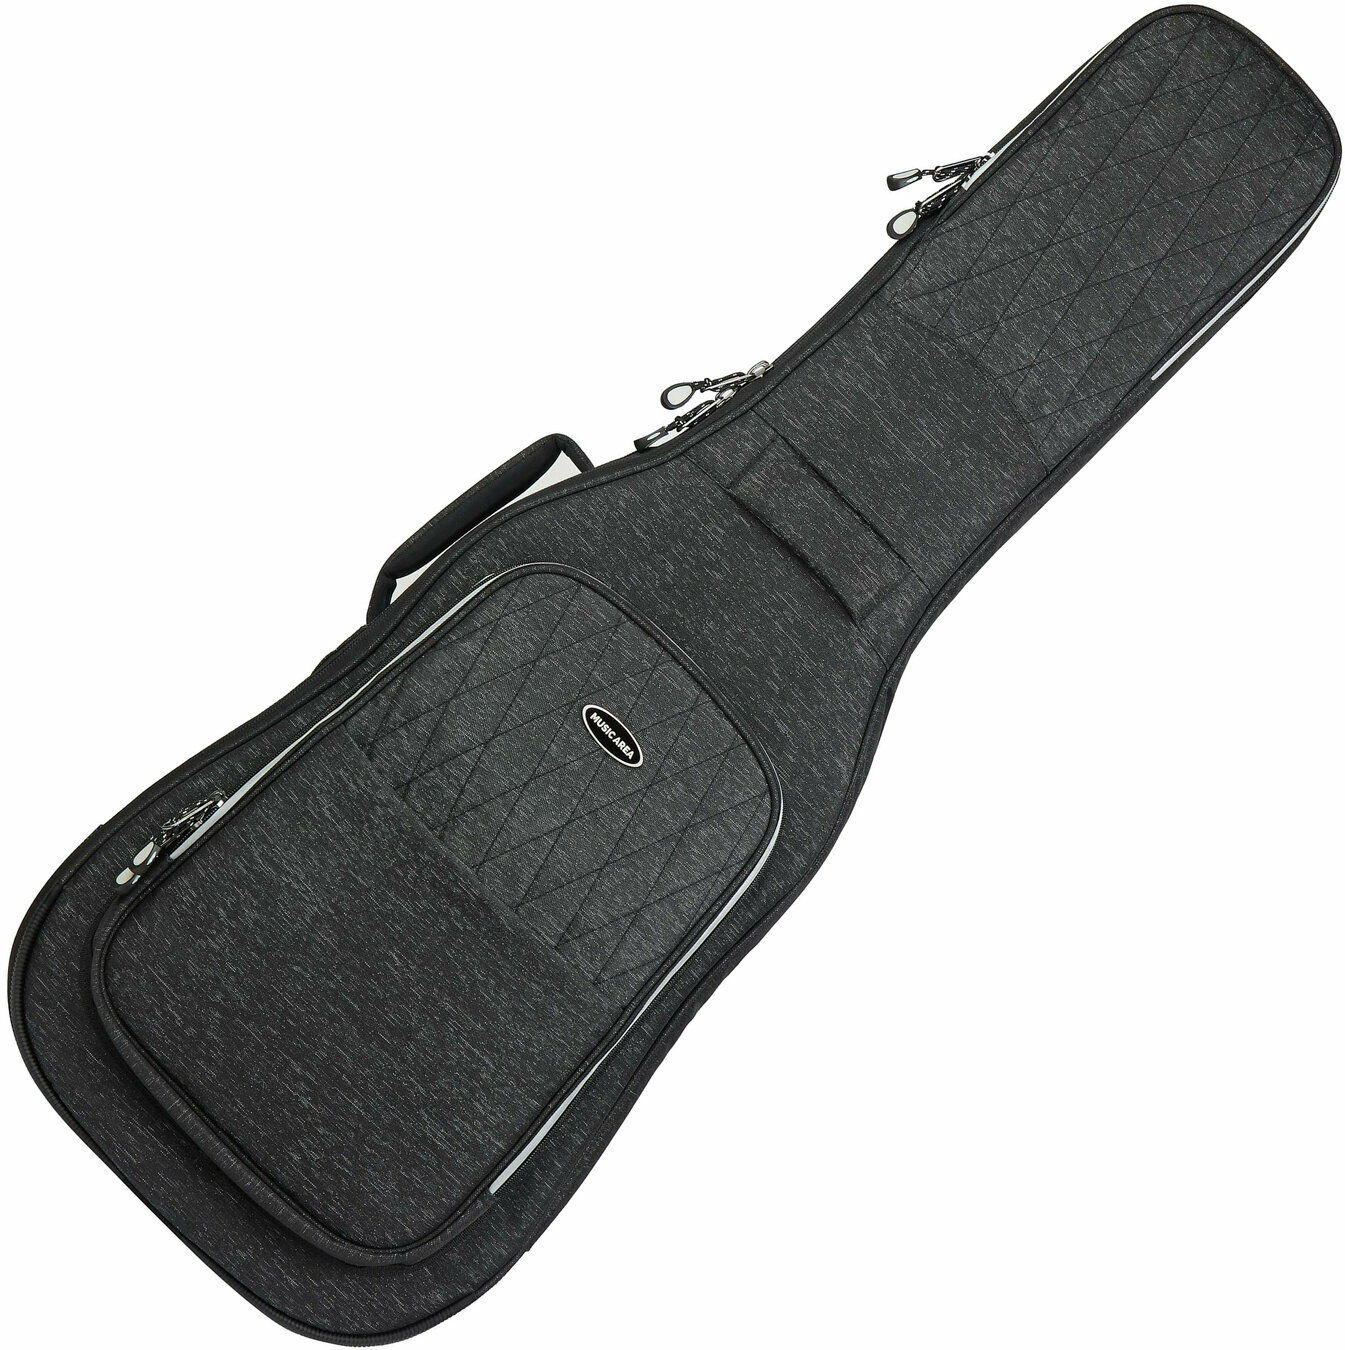 Tasche für E-Gitarre MUSIC AREA TANG30 Electric Guitar Tasche für E-Gitarre Black